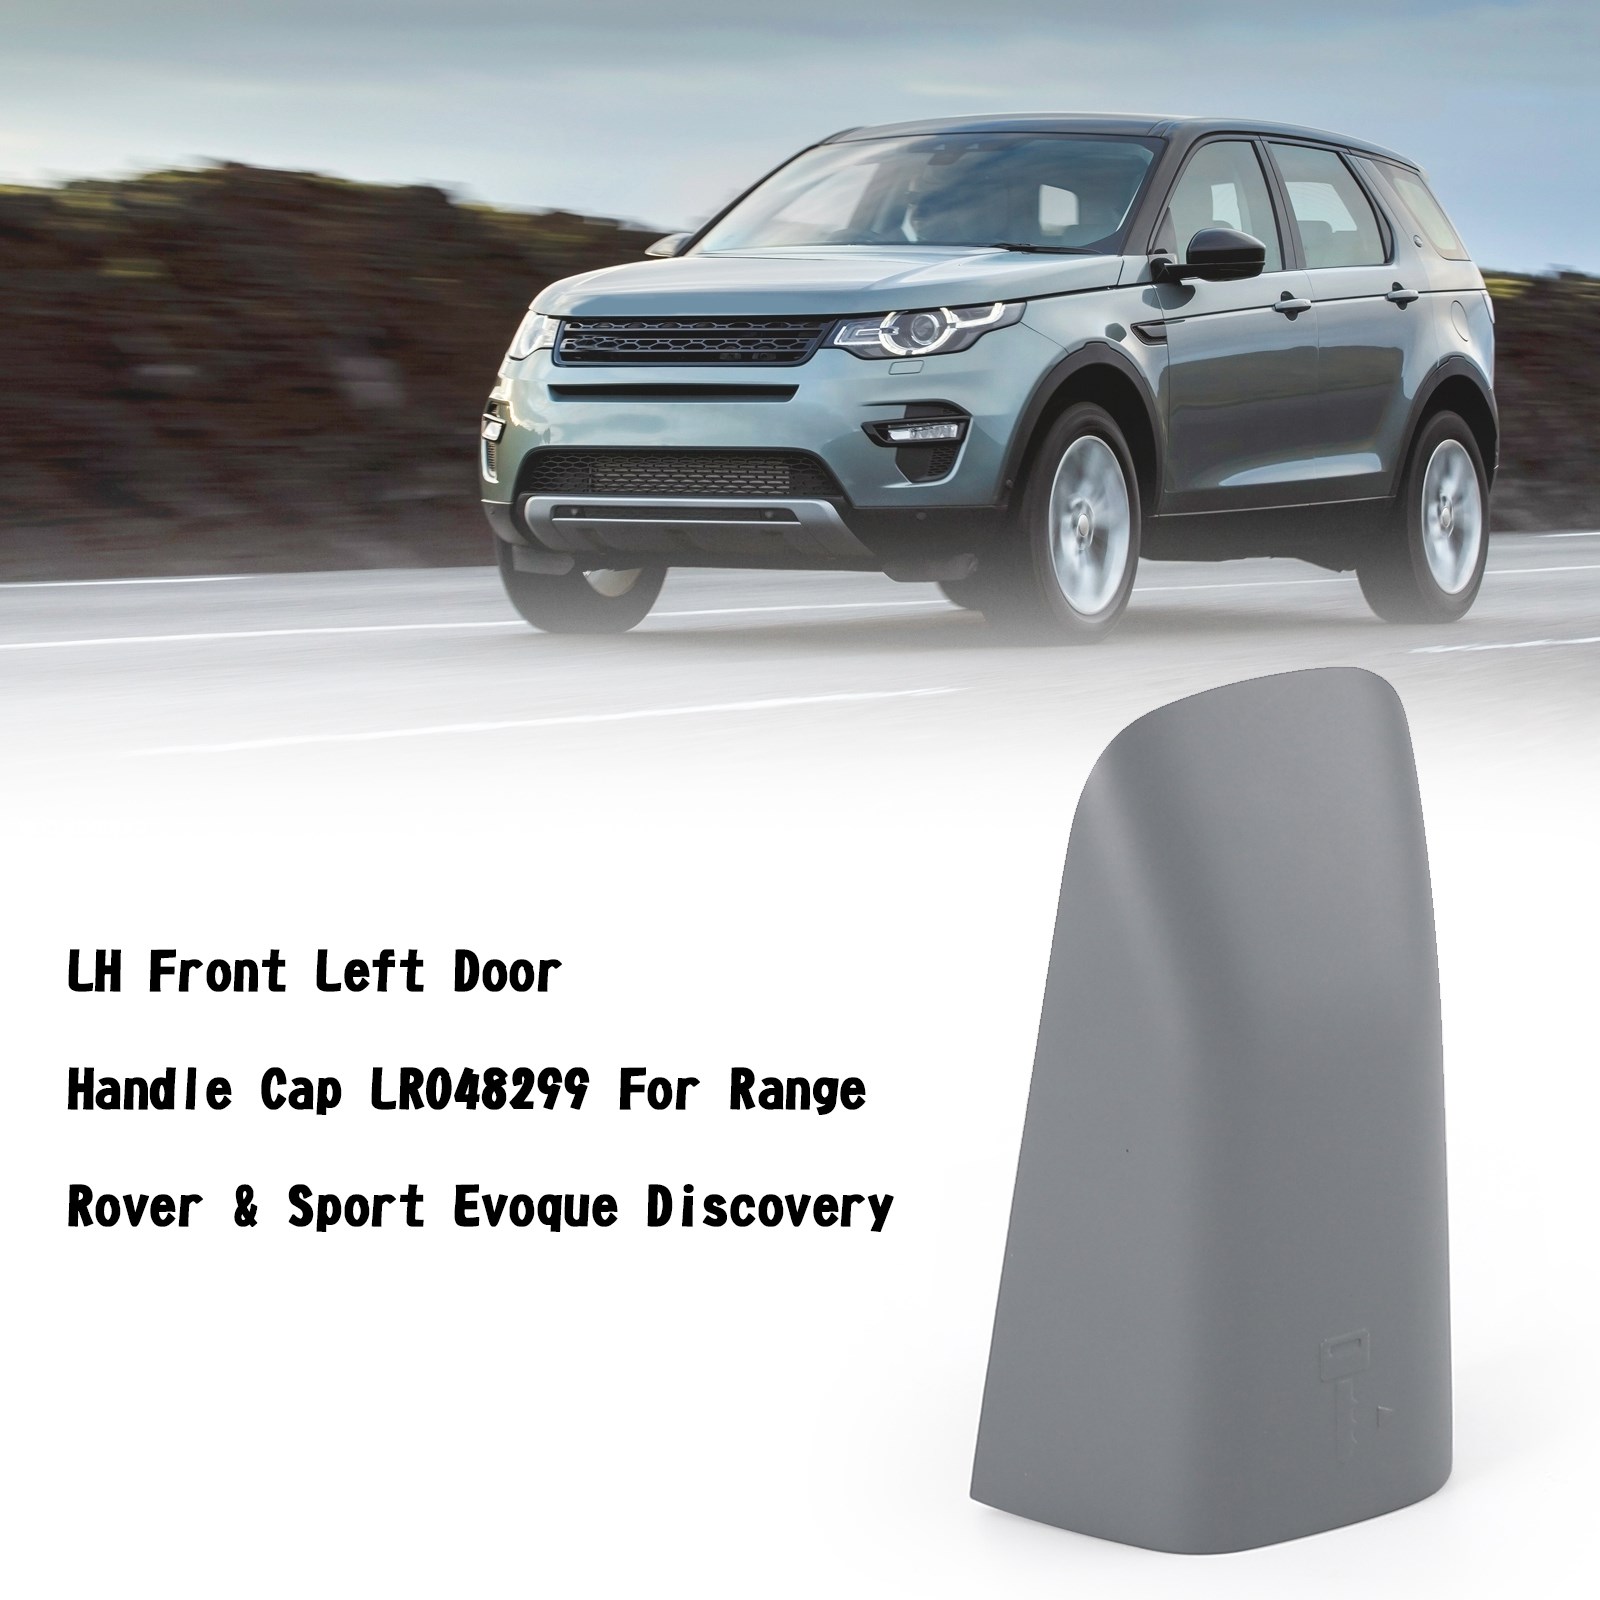 Range Rover & Sport Evoque Discovery LR048299 門把手鎖蓋-極限超快感